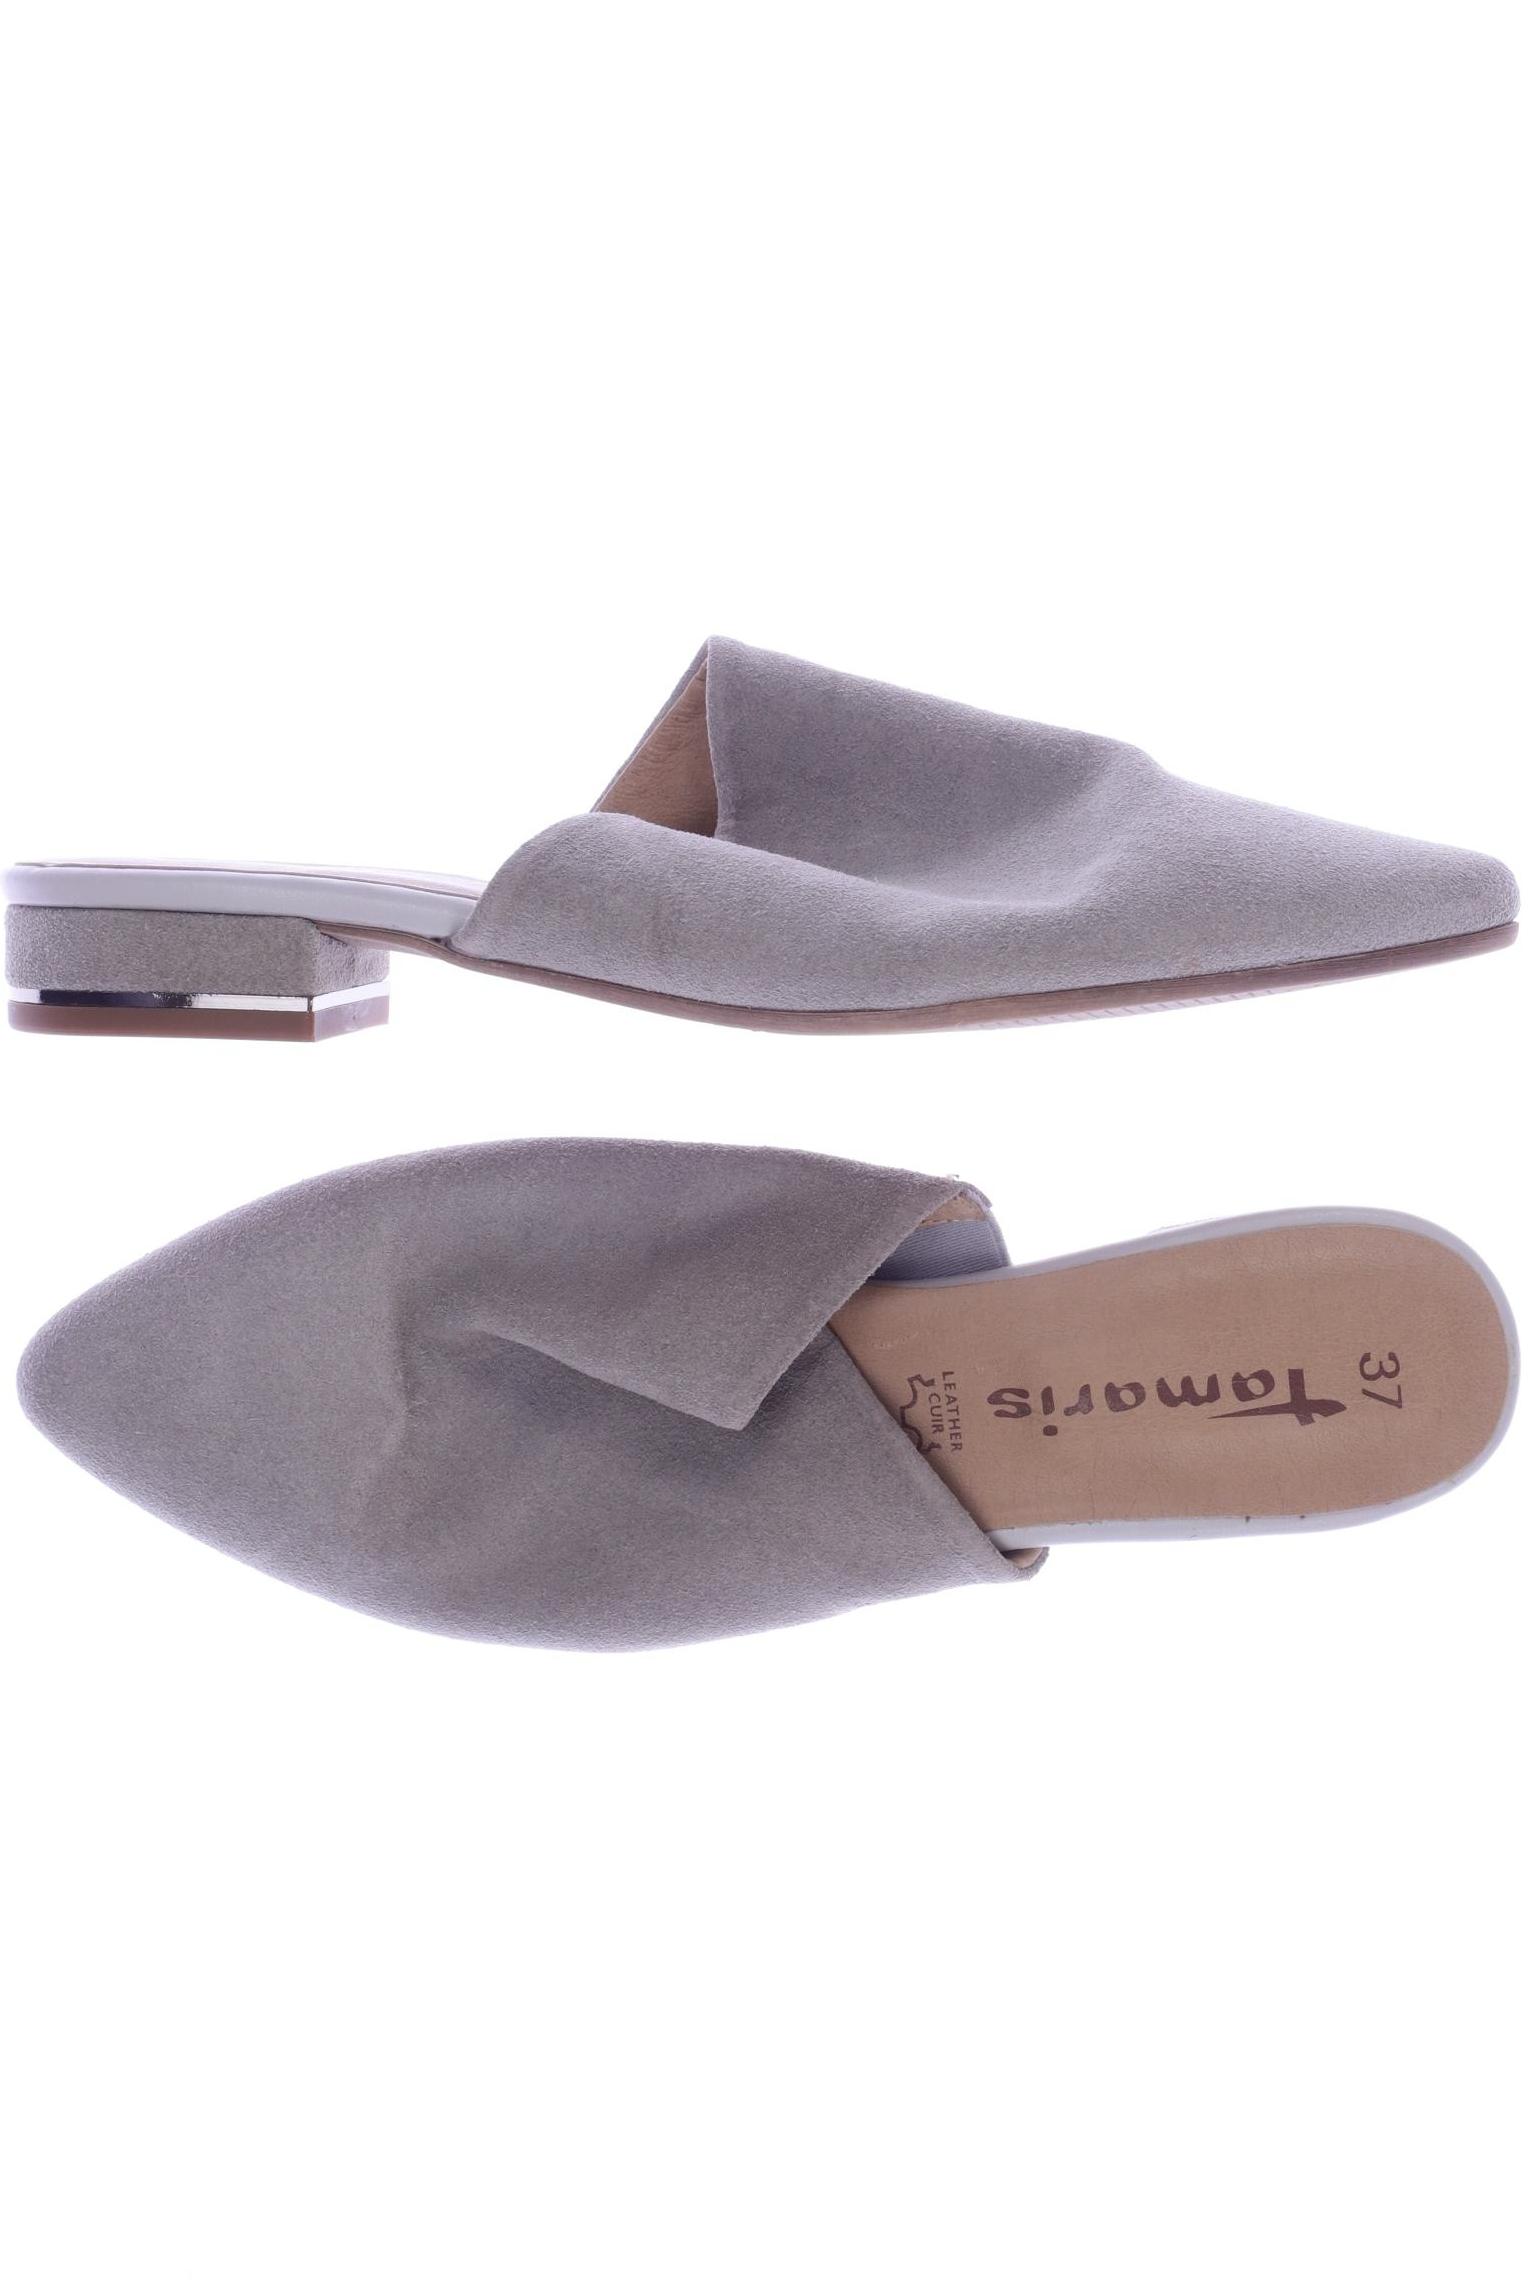 Tamaris sandal women's summer shoes sandal size EU 37 leather gray 